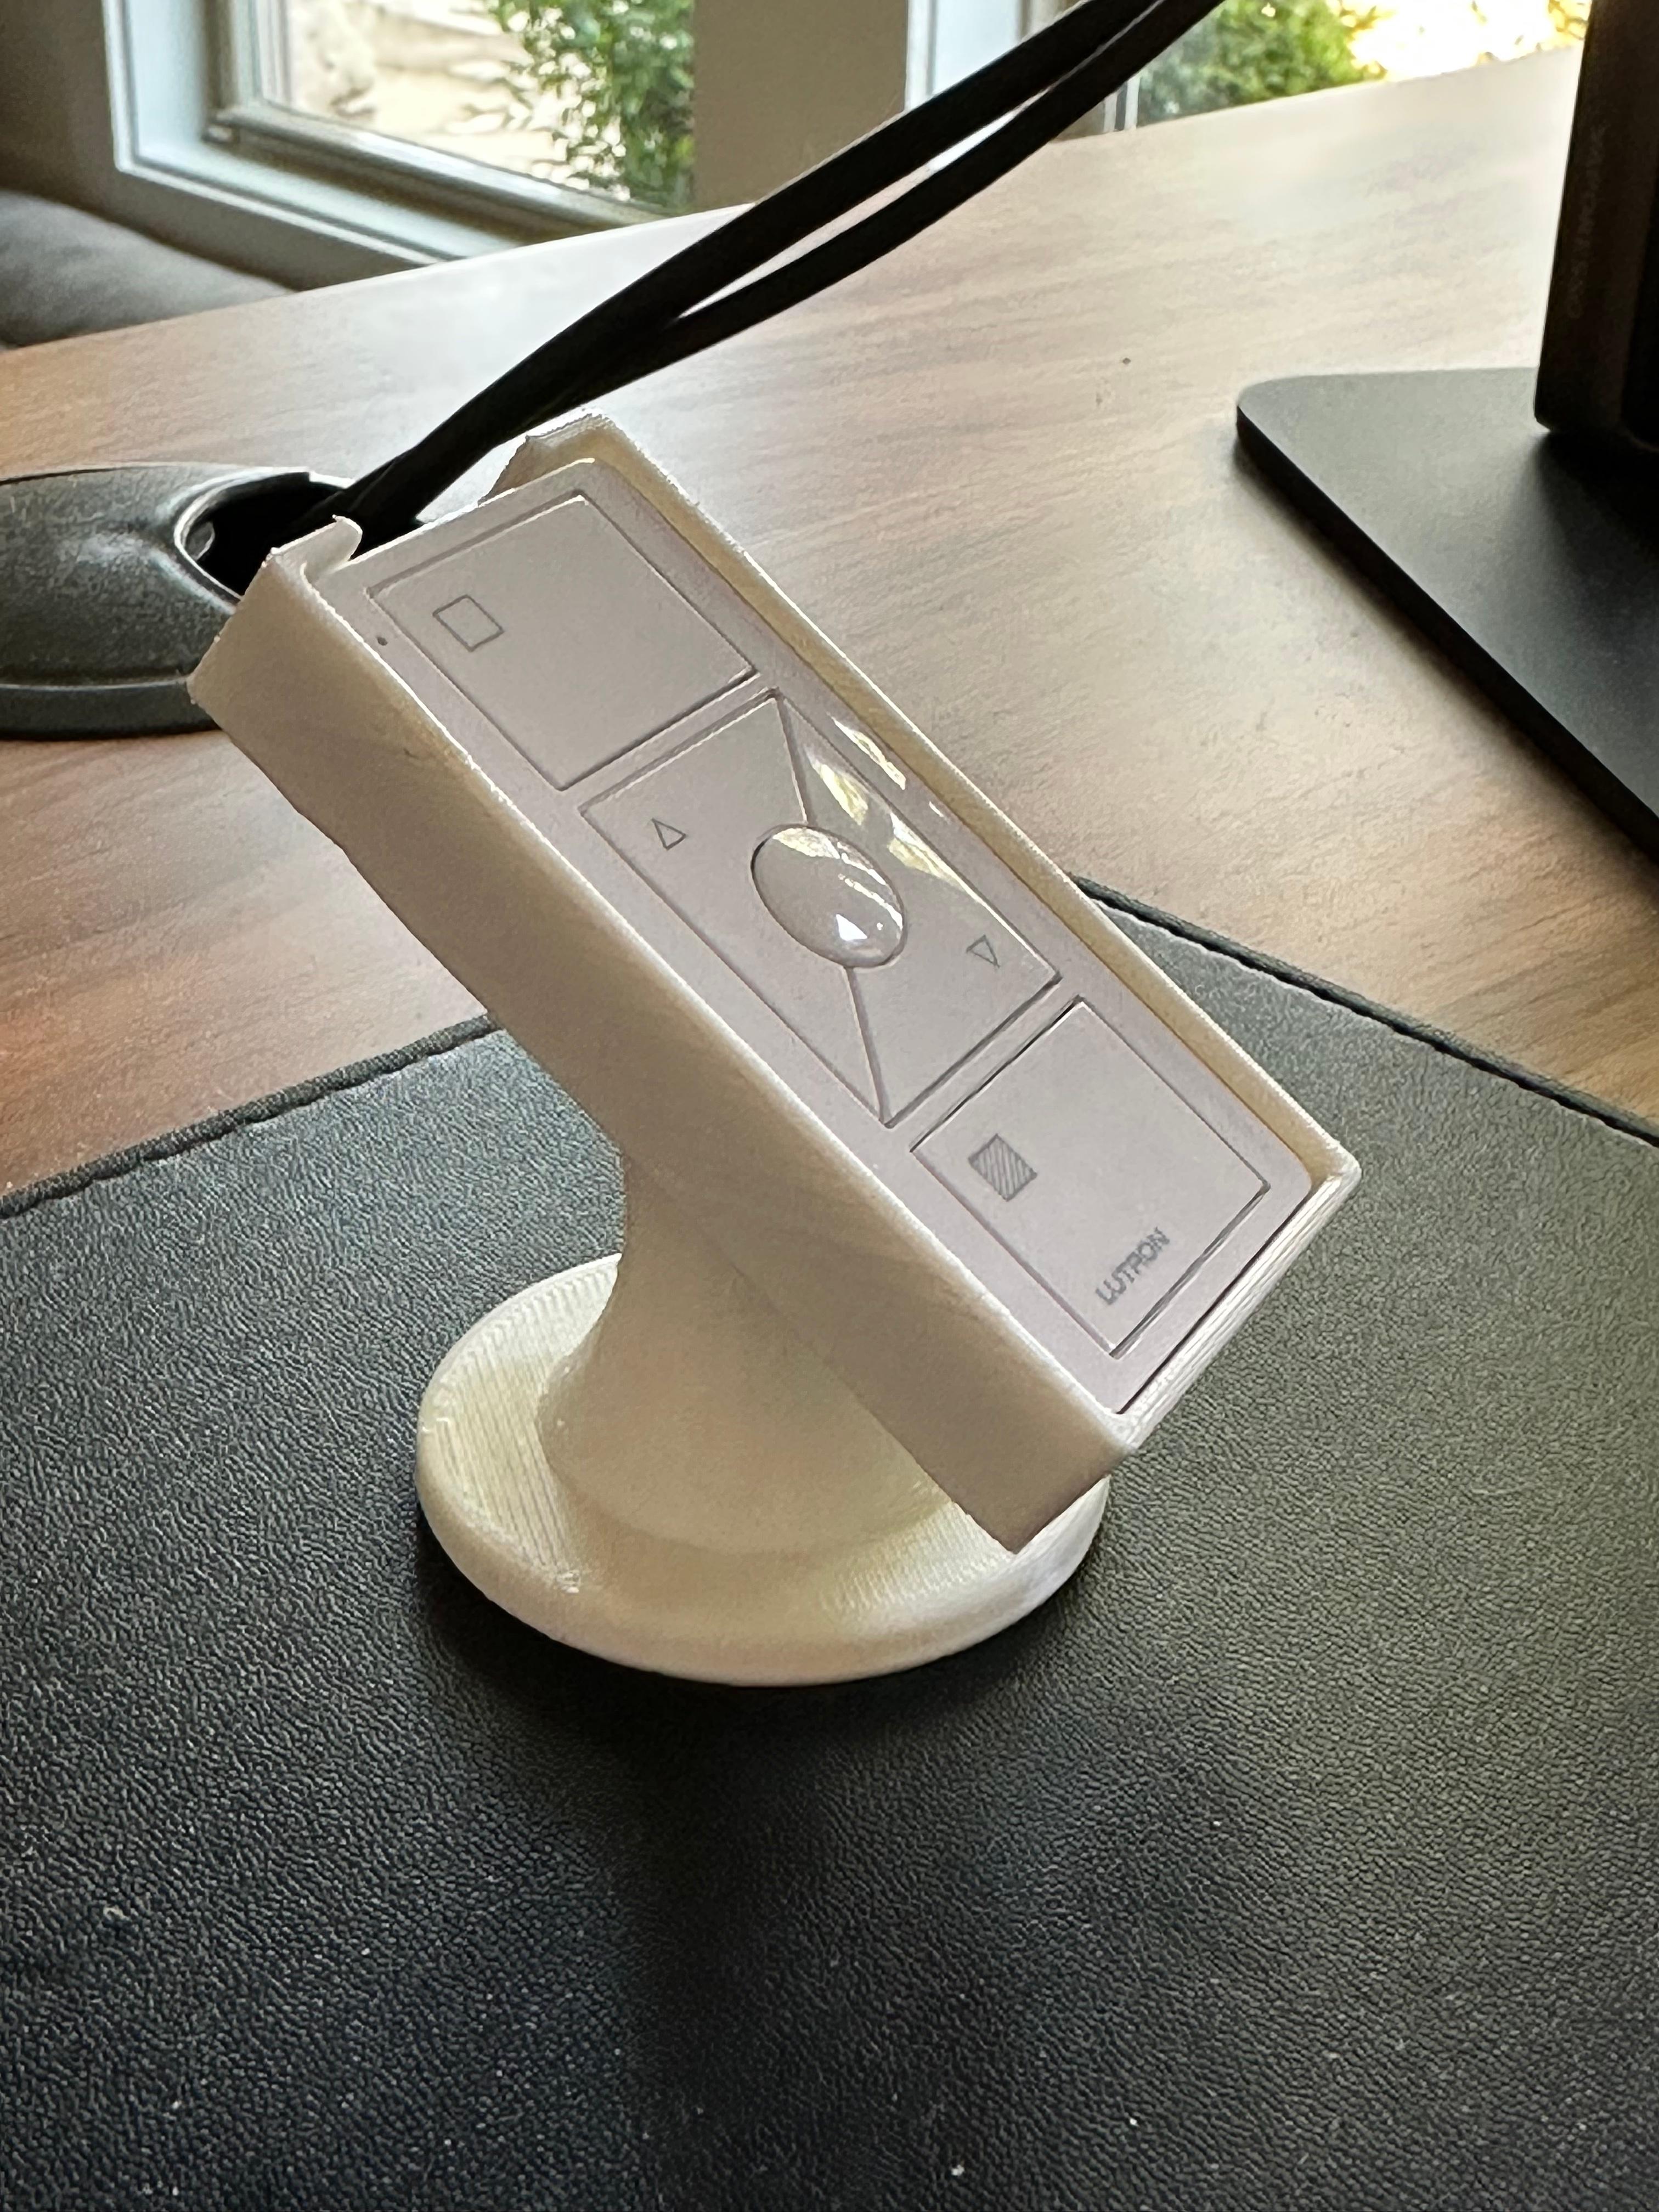 Lutron Pico remote Holder 3d model